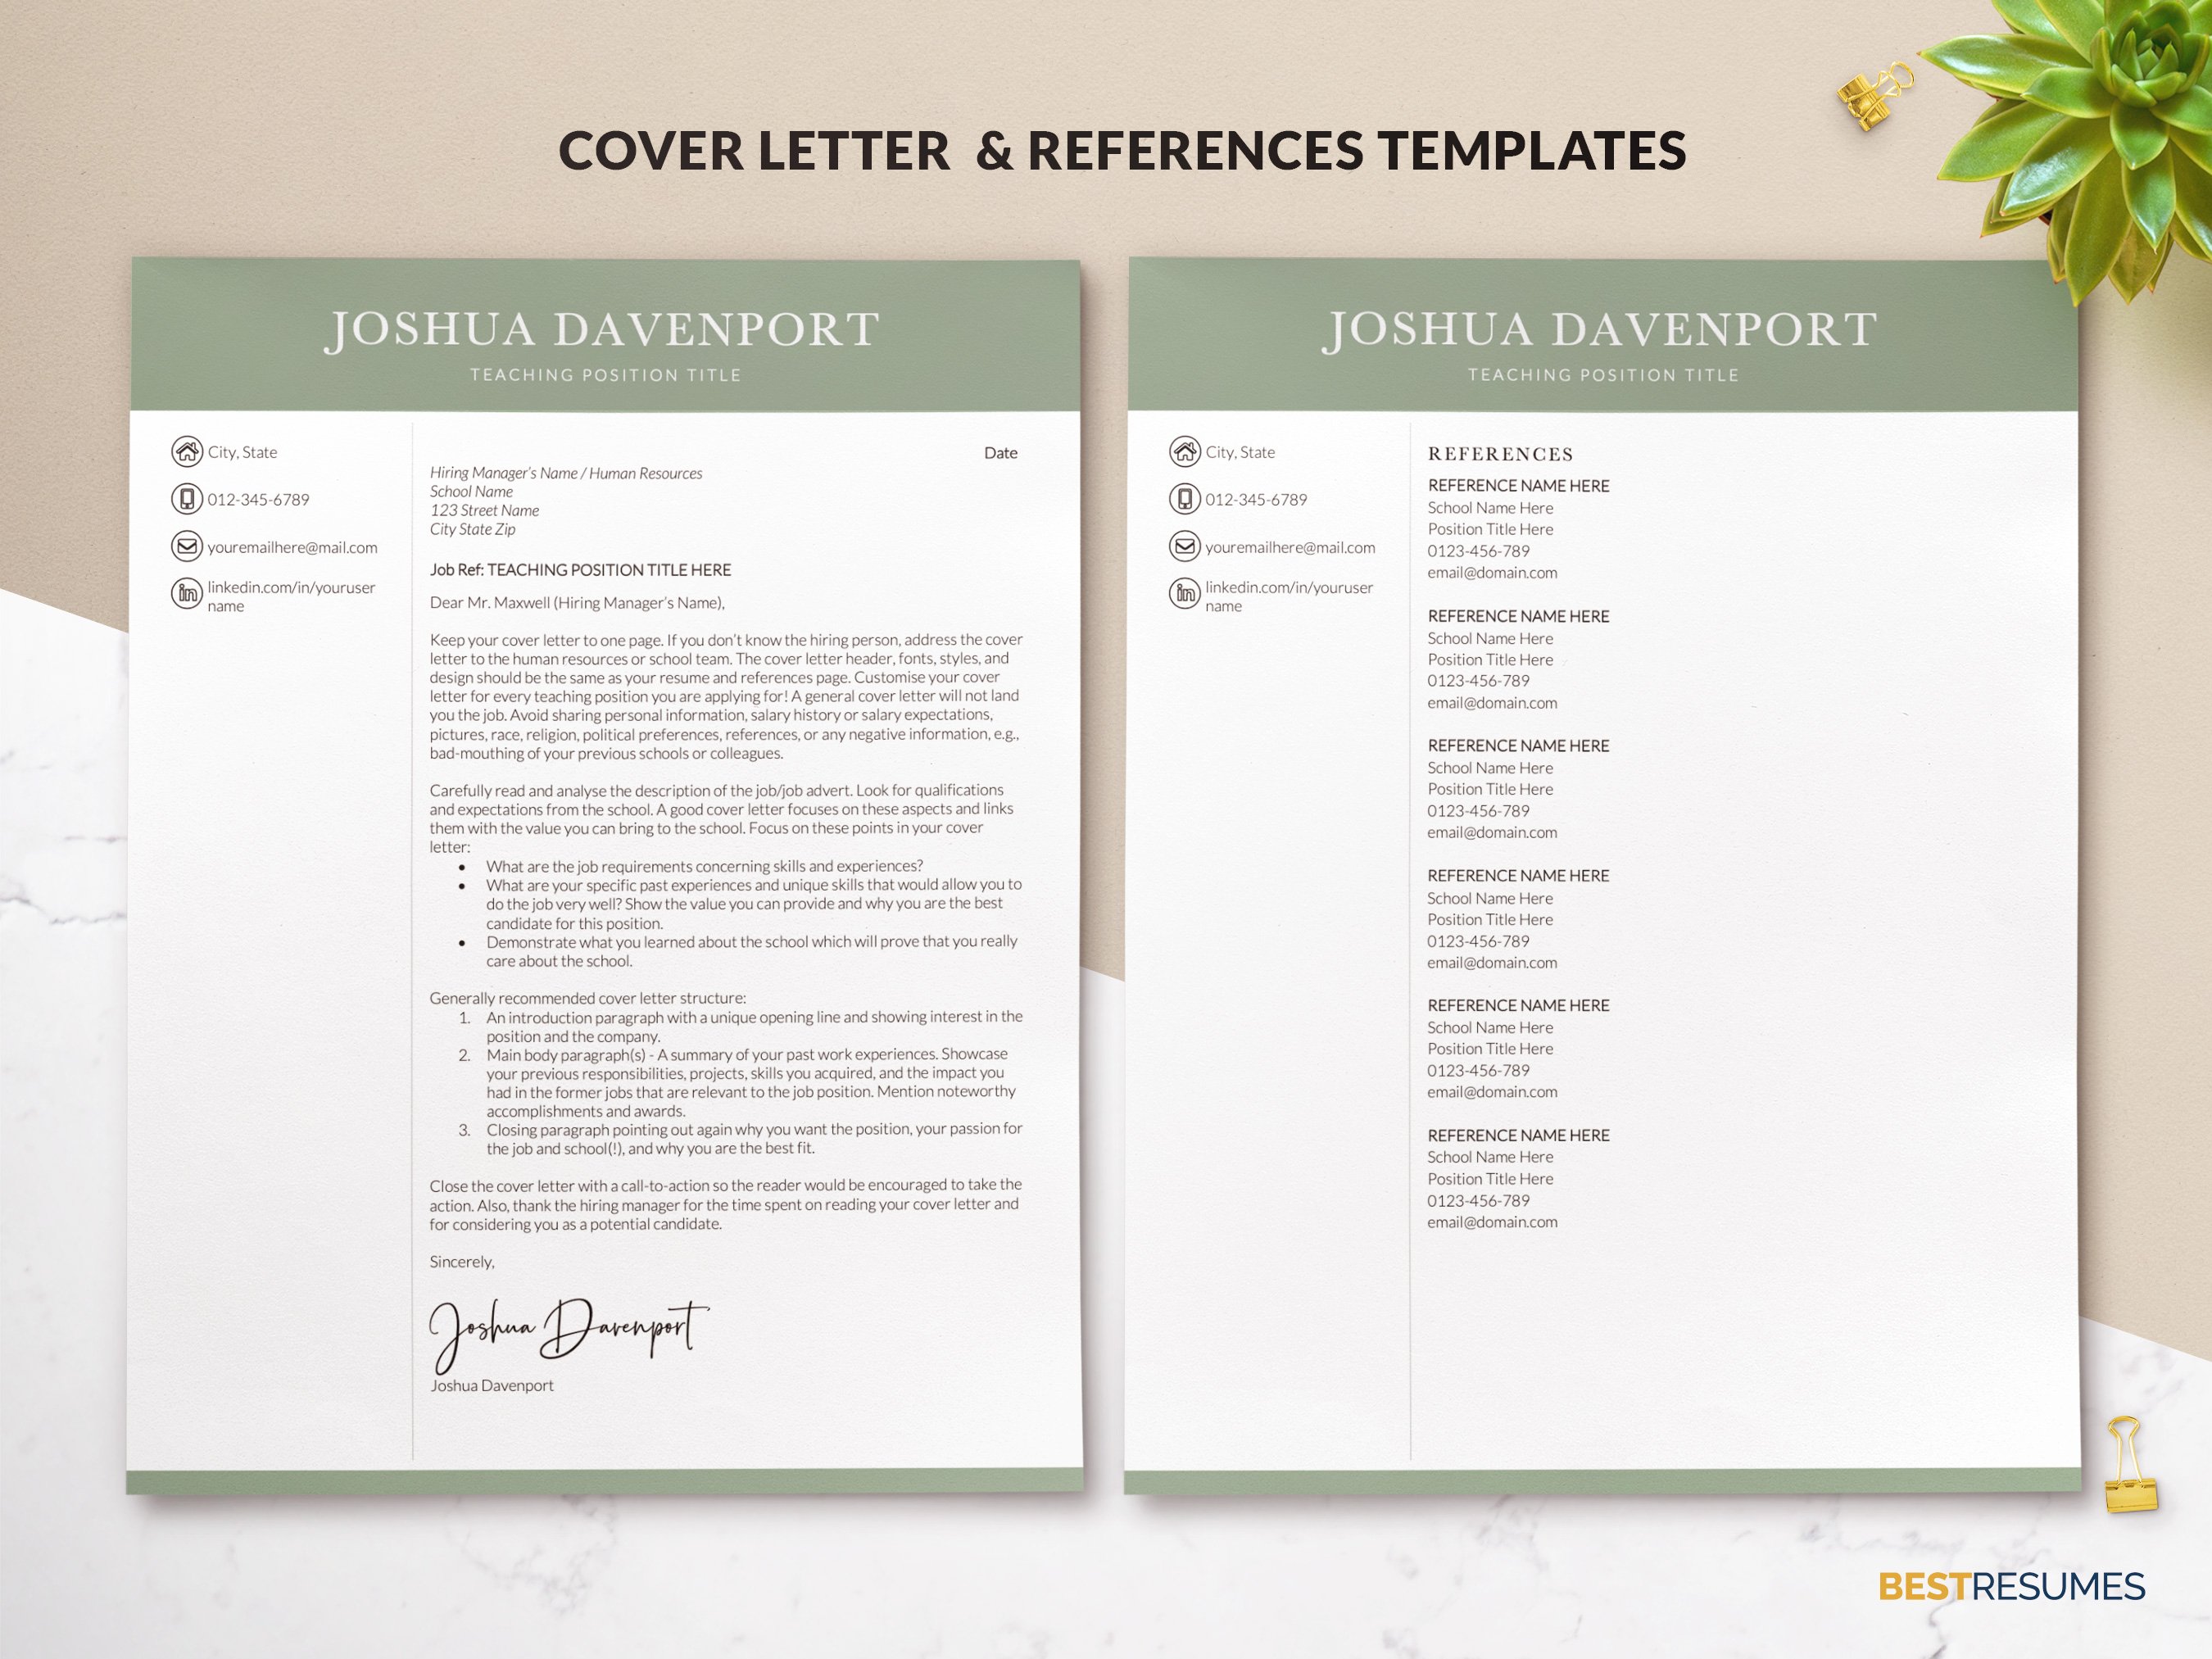 professional resume for teachers template cover letter references joshua davenport 217